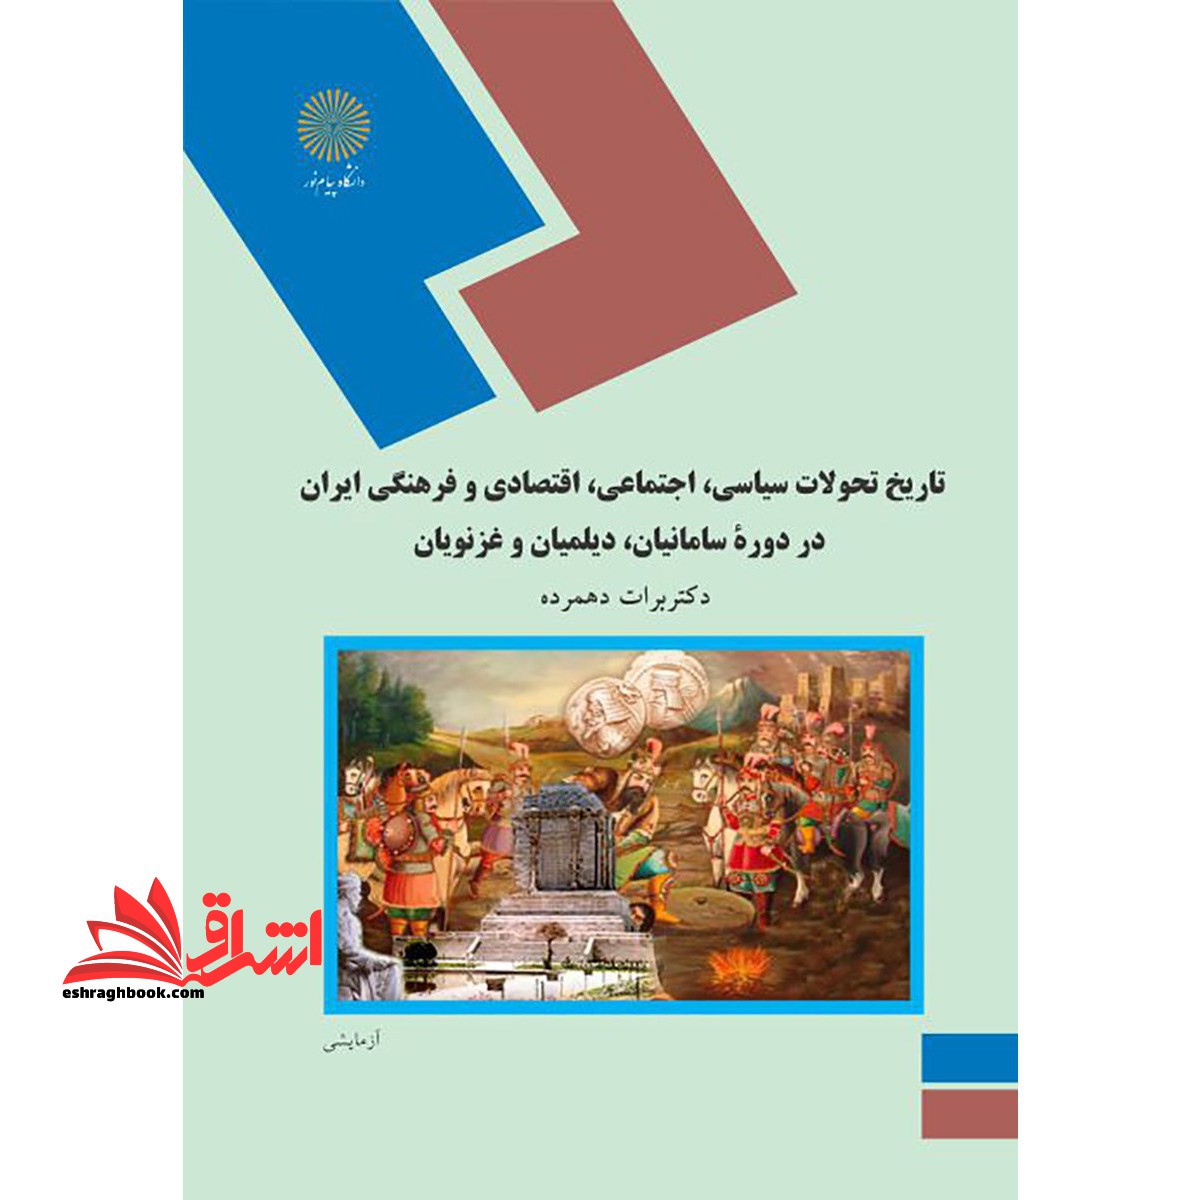 ت‍اری‍خ  س‍ی‍اس‍ی ، اج‍ت‍م‍اع‍ی ، اق‍ت‍ص‍ادی  و ف‍ره‍ن‍گ‍ی  ای‍ران  در دوره  س‍ام‍ان‍ی‍ان ، دی‍ل‍م‍ی‍ان  و غ‍زن‍وی‍ان